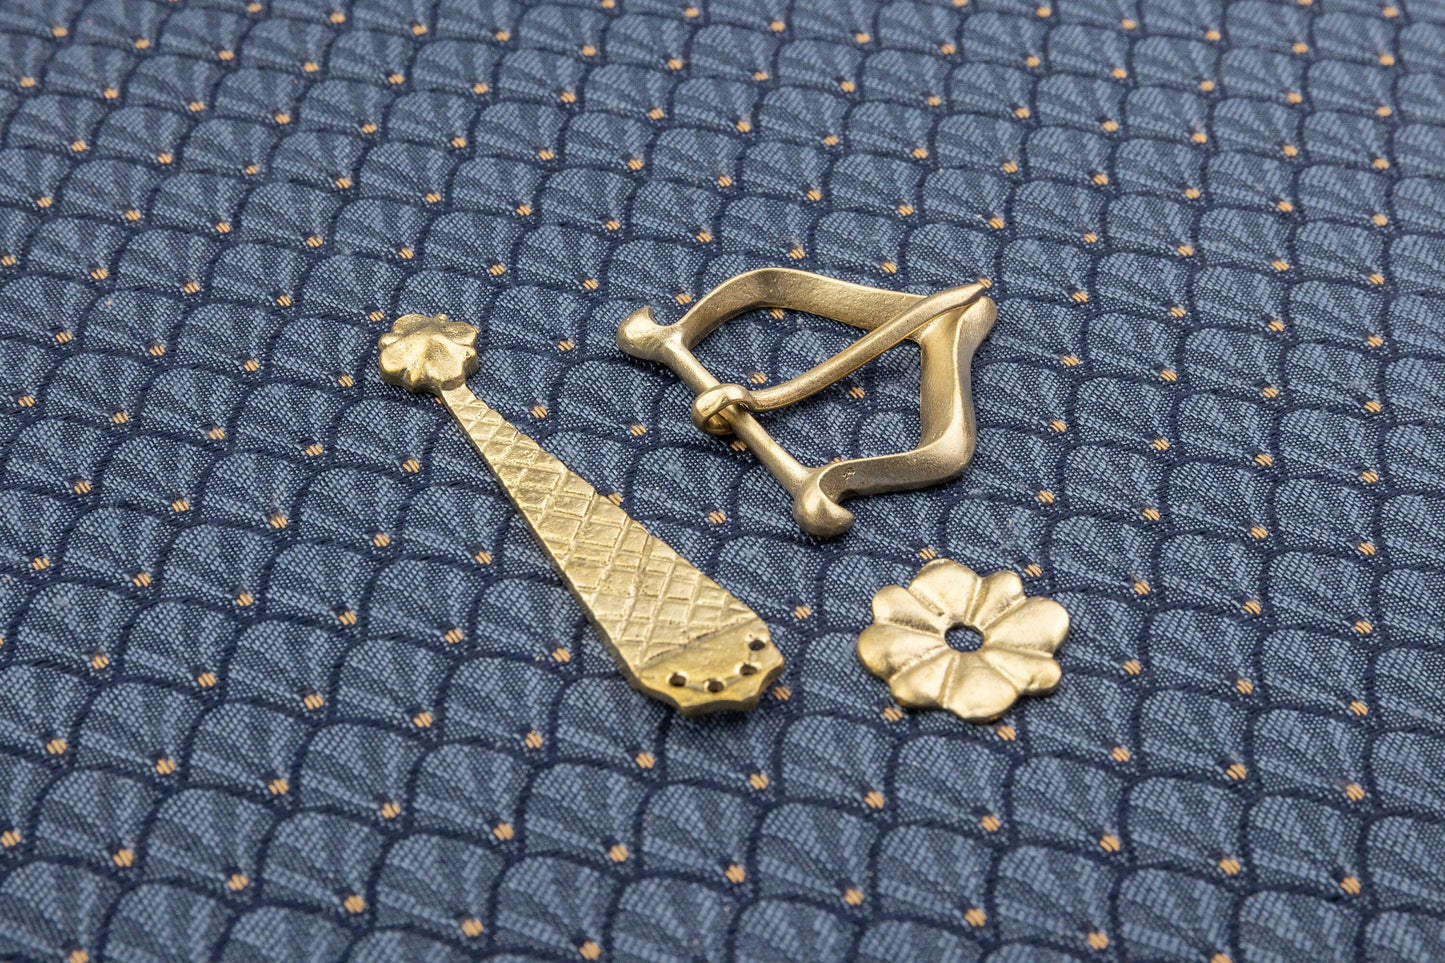 Medieval buckle set - 3 piece